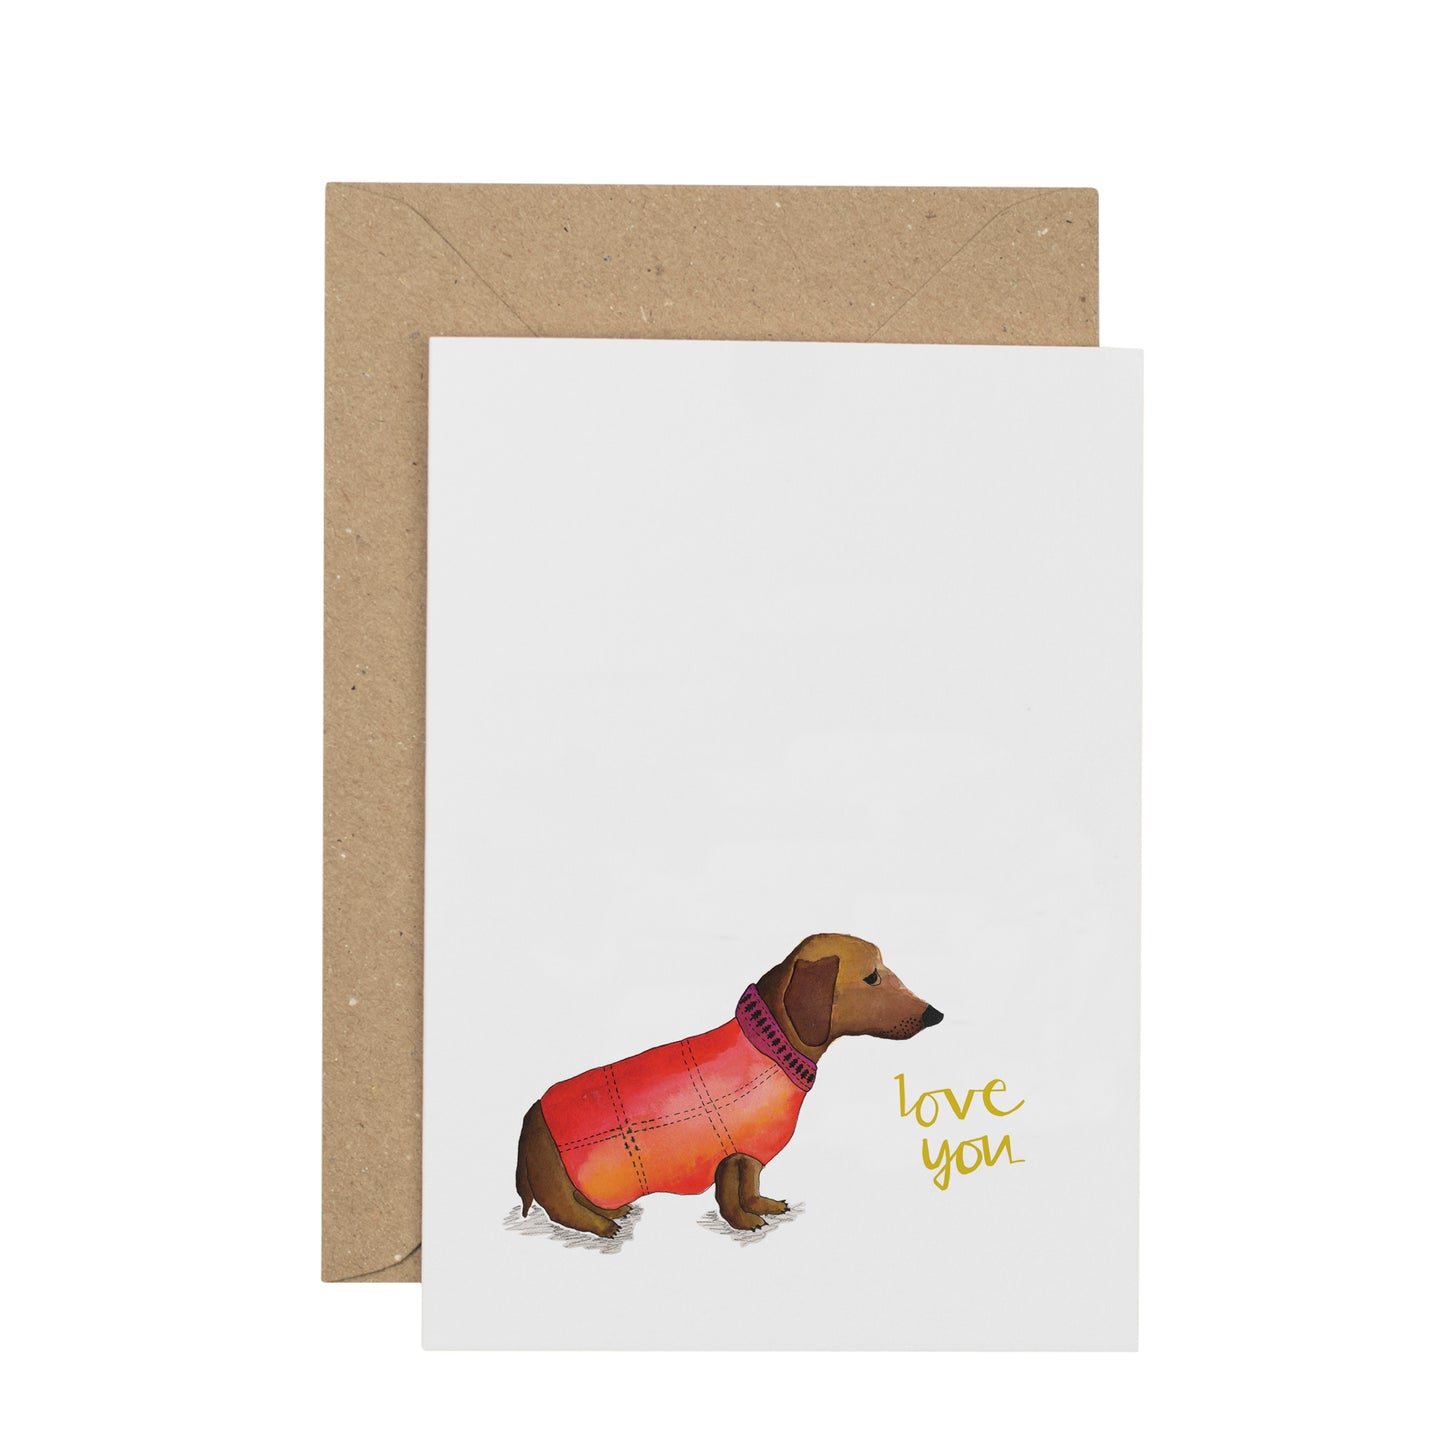 sausage-dog-i-love-you-greetings-card